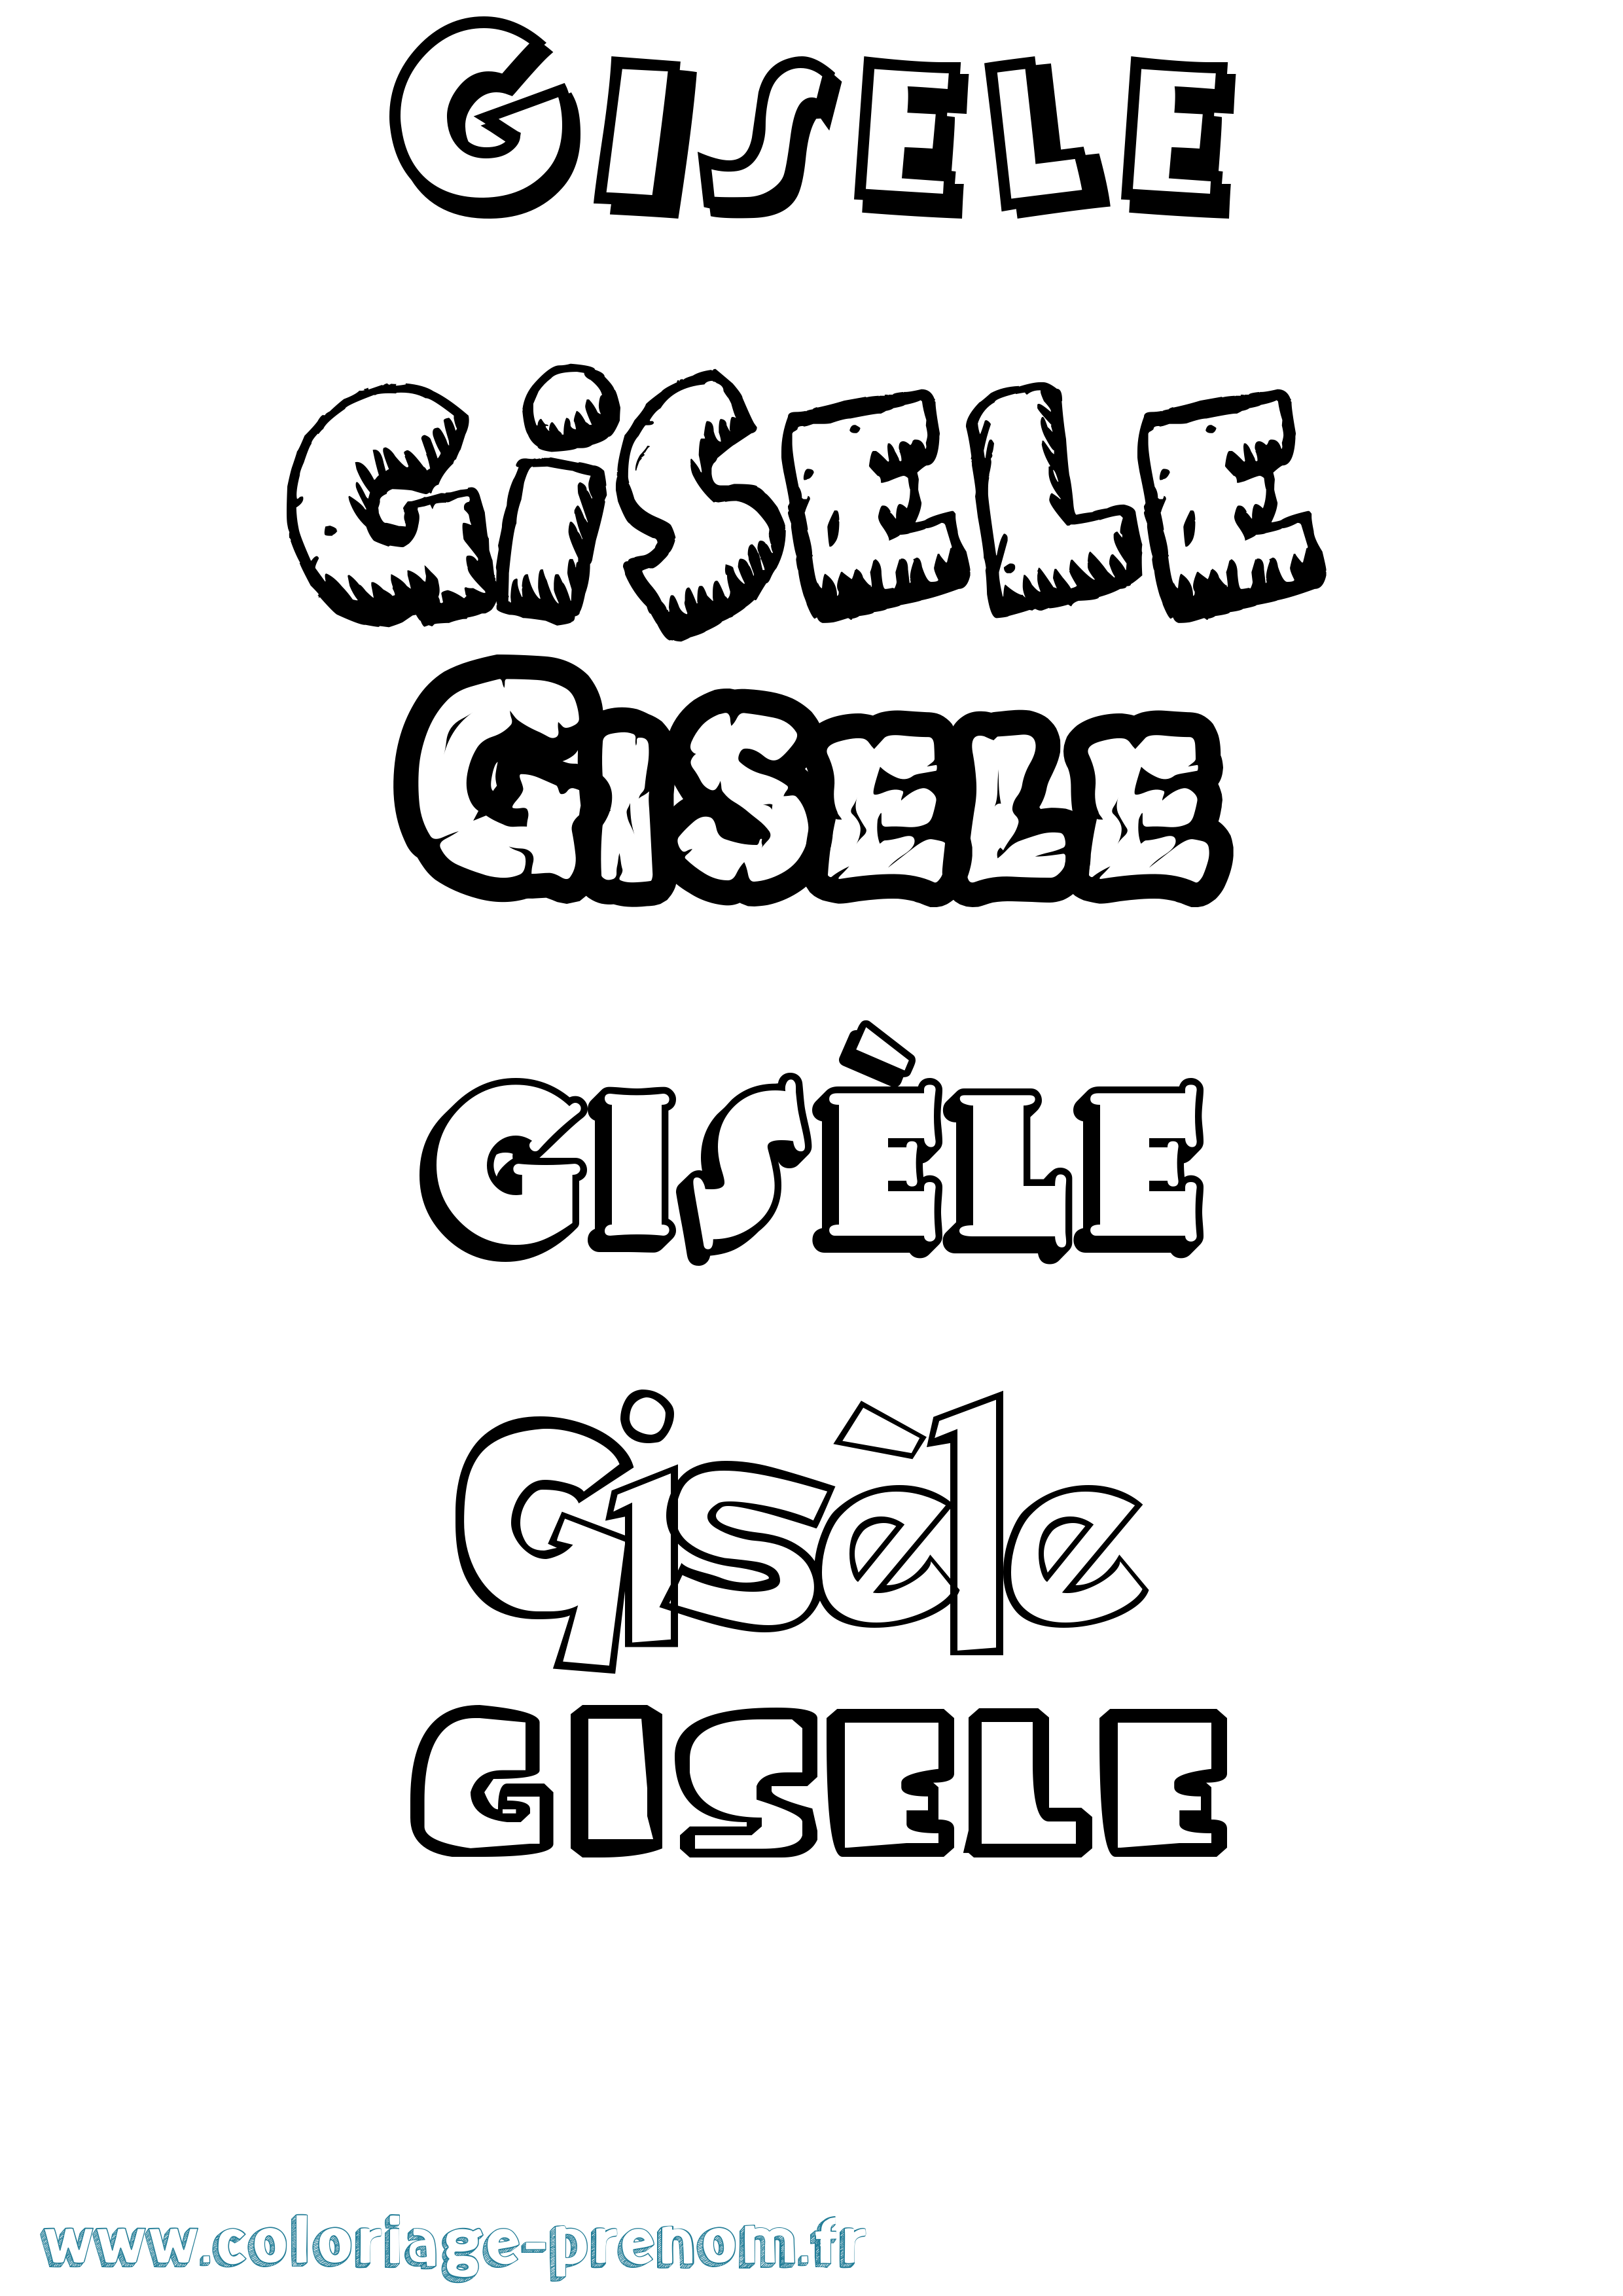 Coloriage prénom Gisèle